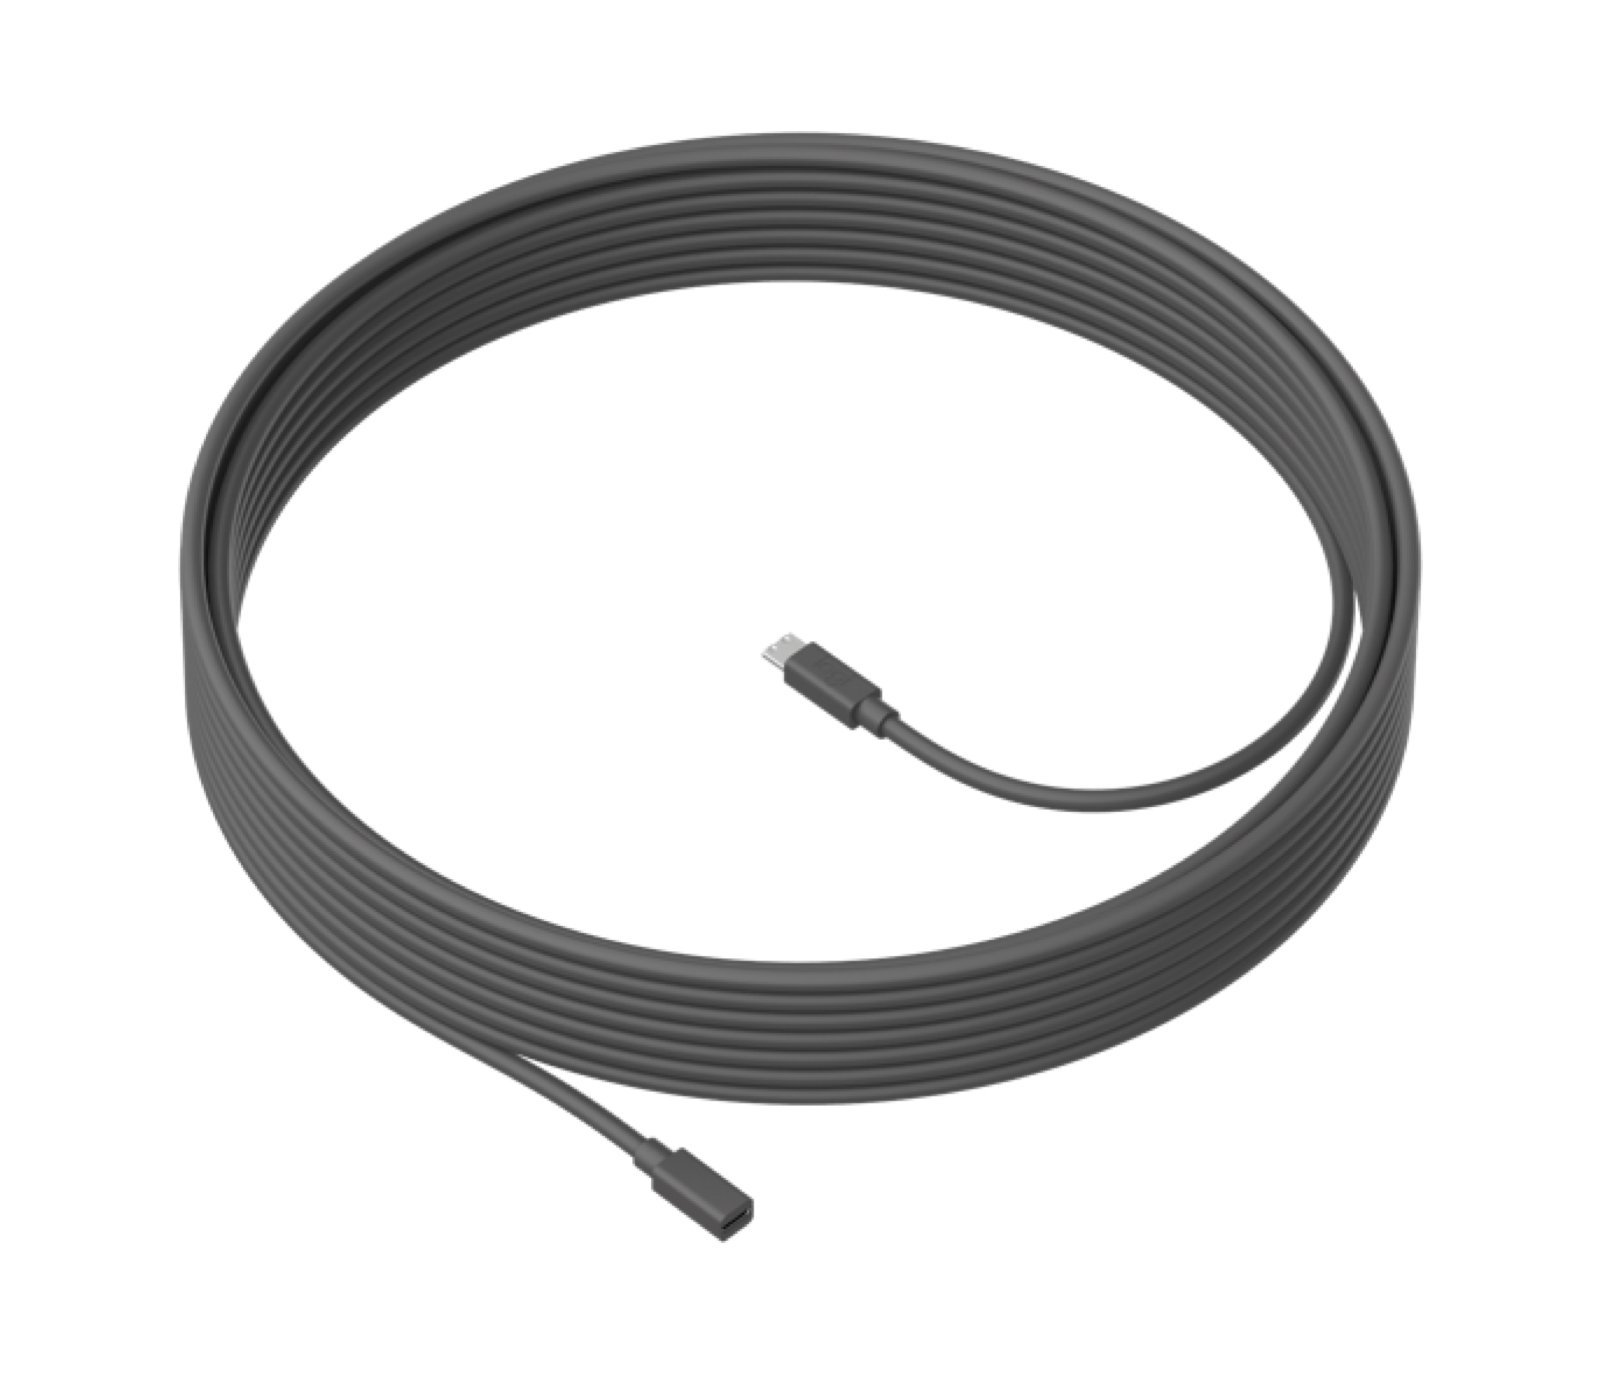 Logitech Cable ZMIEEMEE / 950-000005 Black